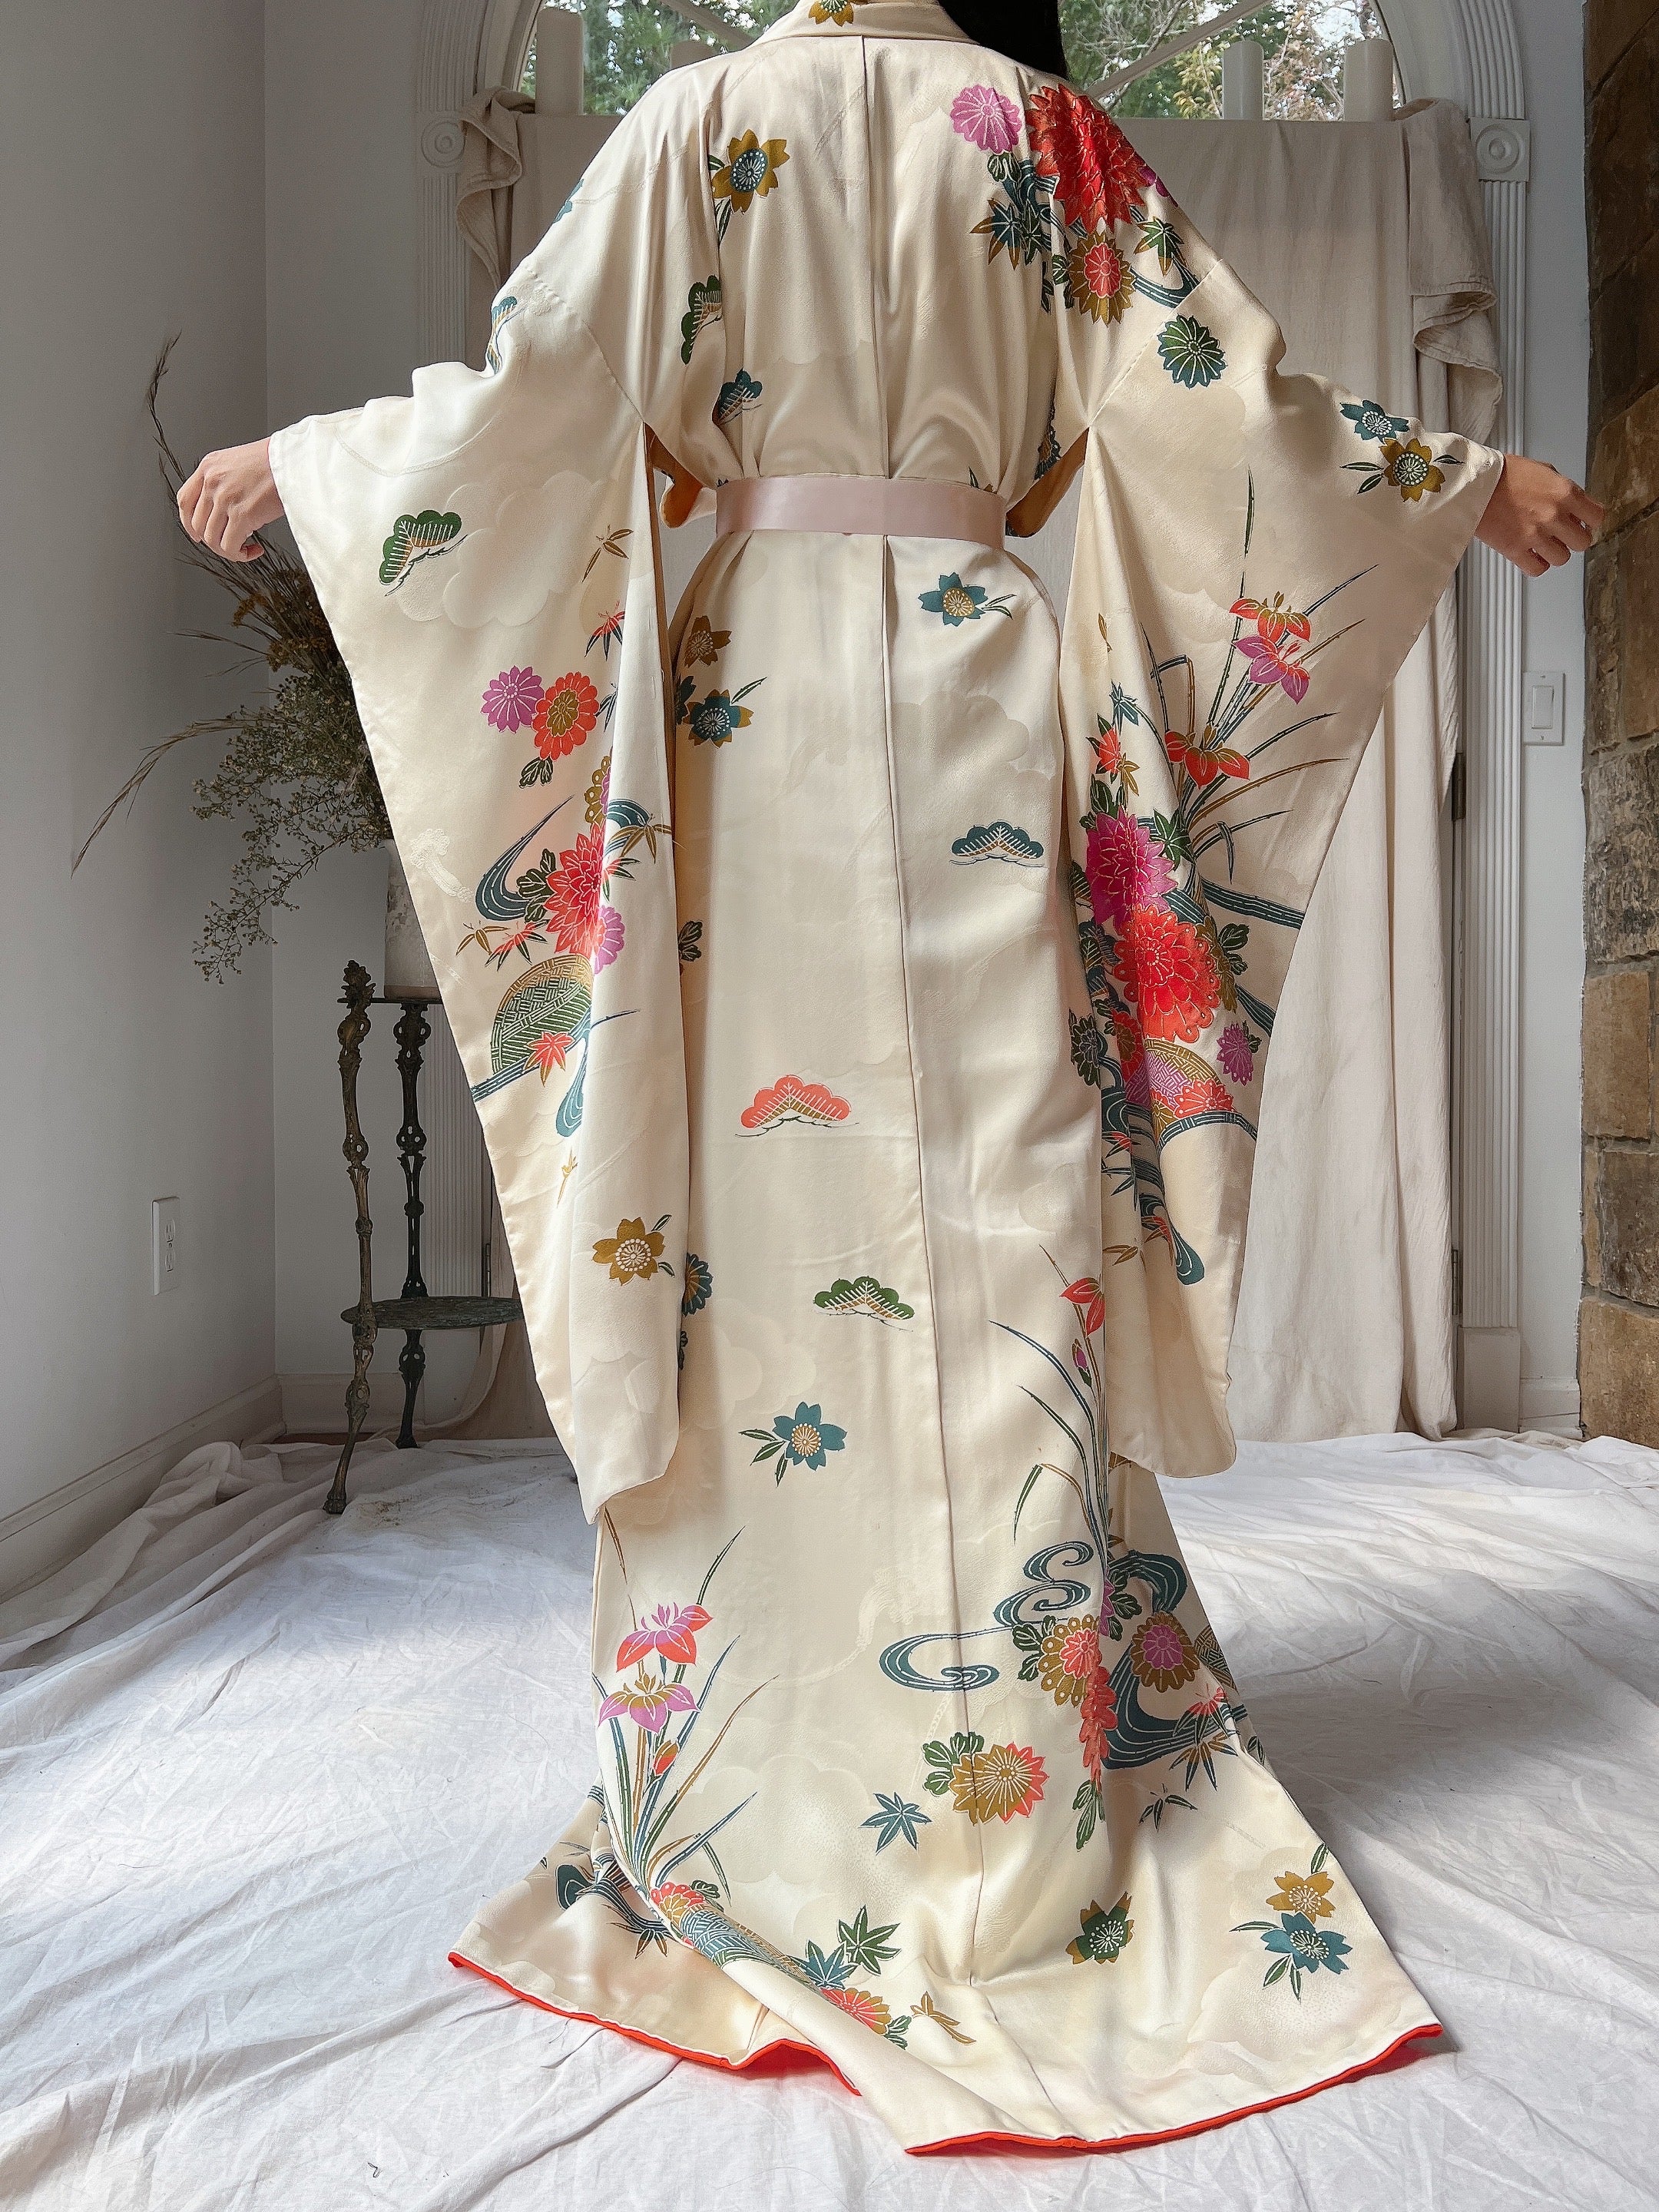 Vintage Ivory Floral/Butterfly Silk Kimono - One Size